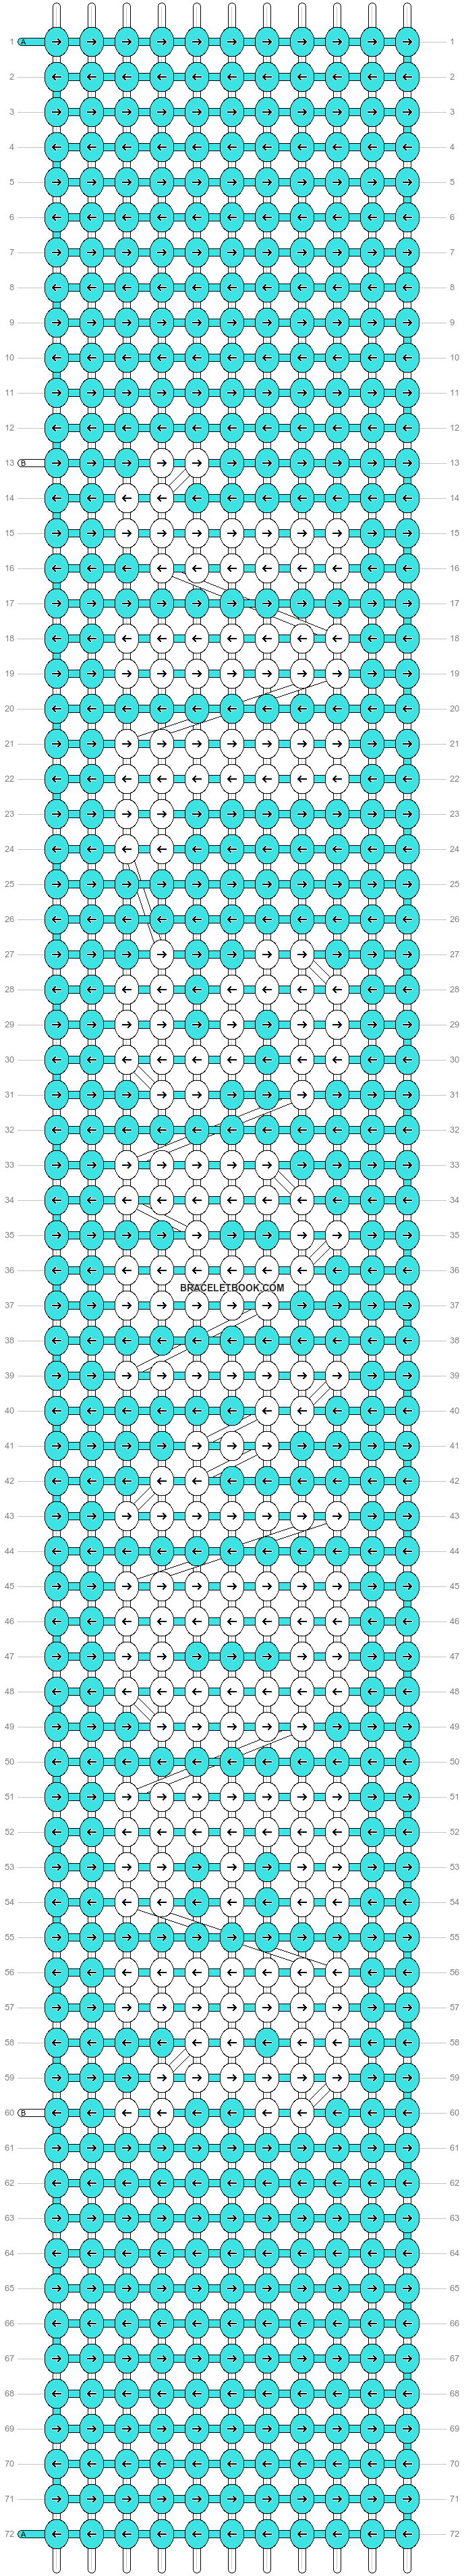 Alpha pattern #60467 variation #107888 pattern